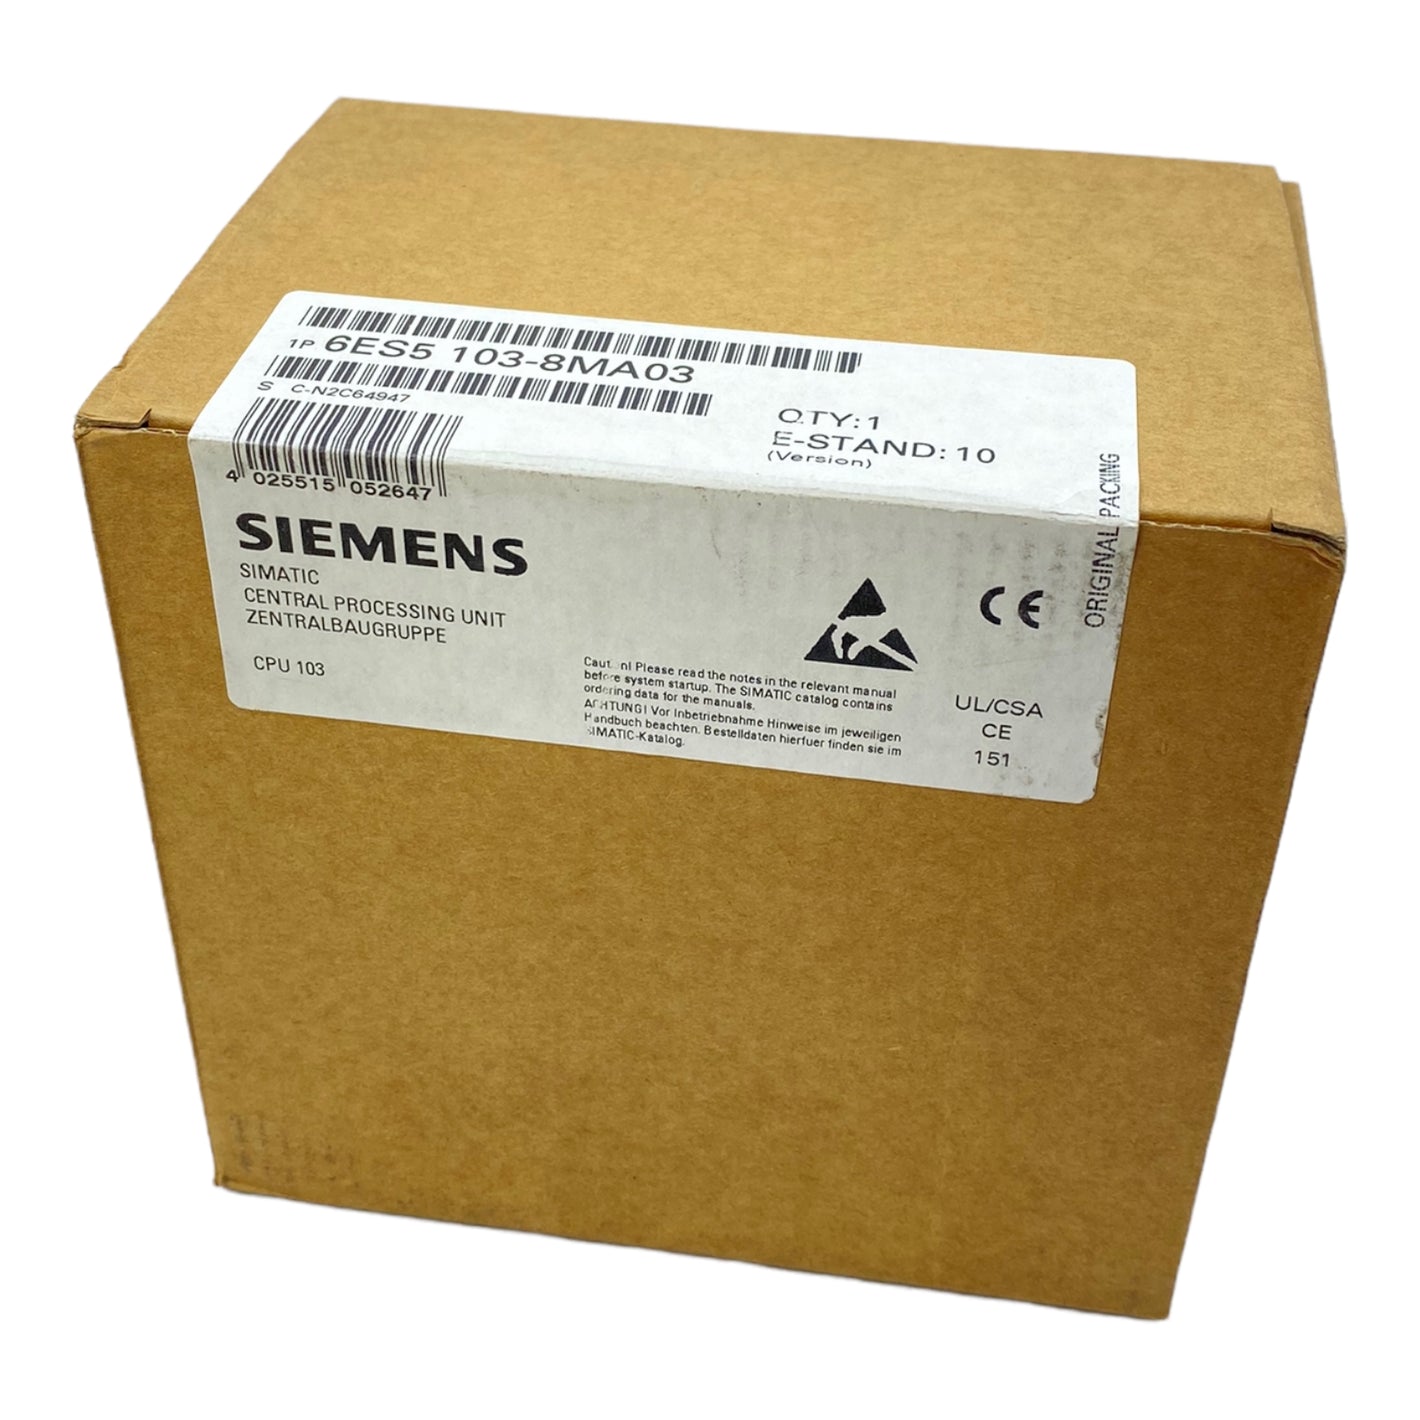 Siemens 6ES5103-8MA03 CPU 103 central processing unit, SIMATIC S5 